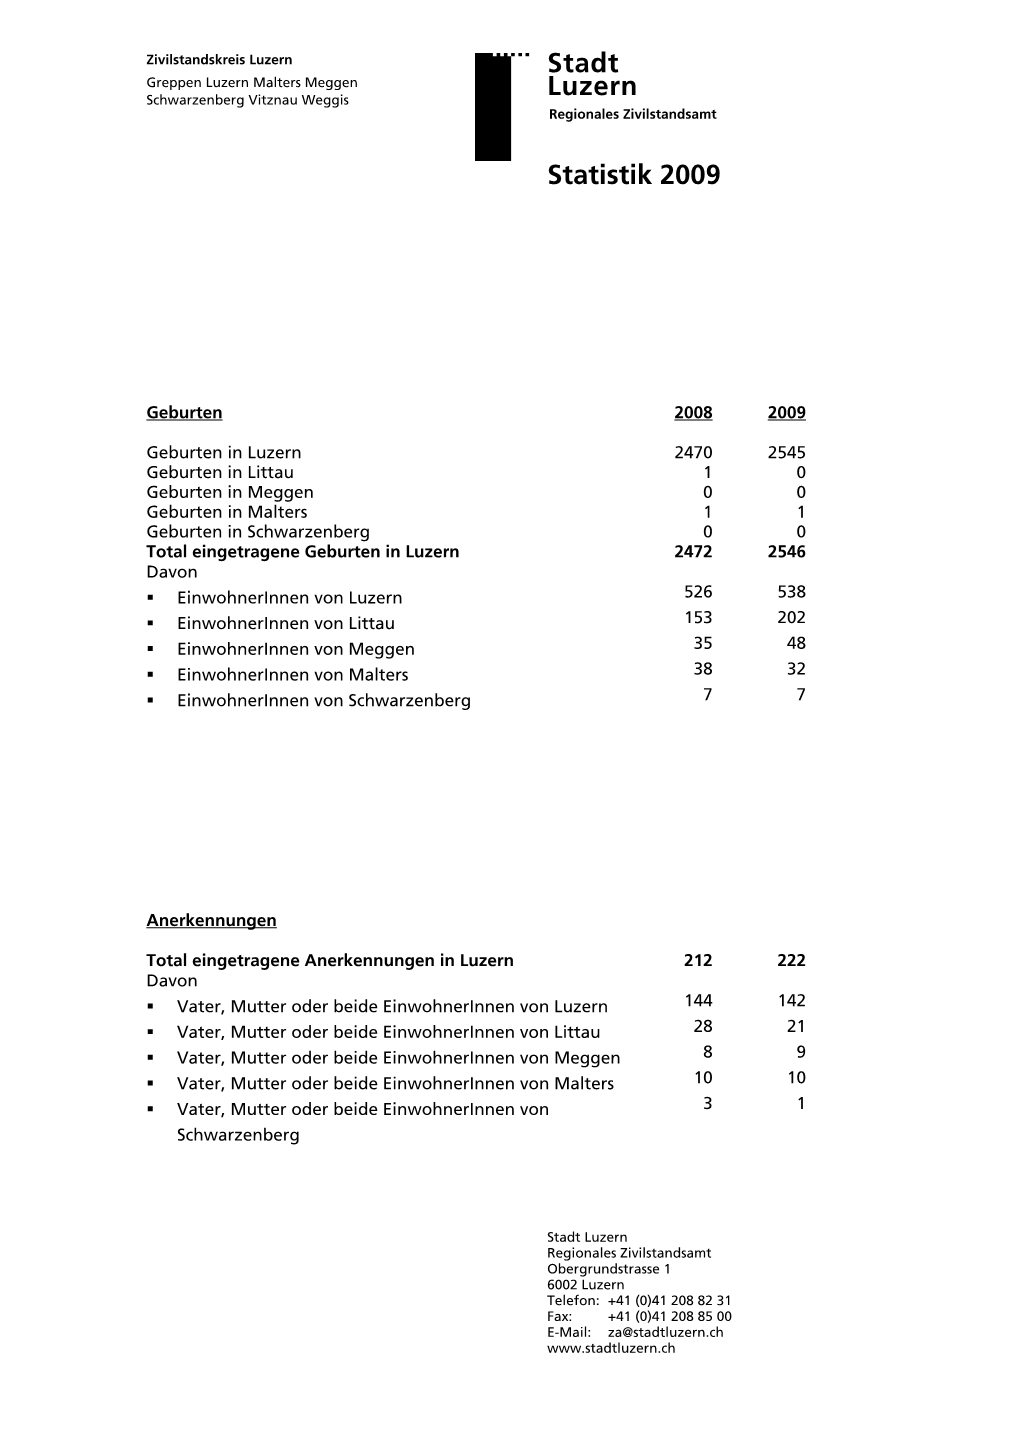 Regionales Zivilstandsamt, Statistik 2009